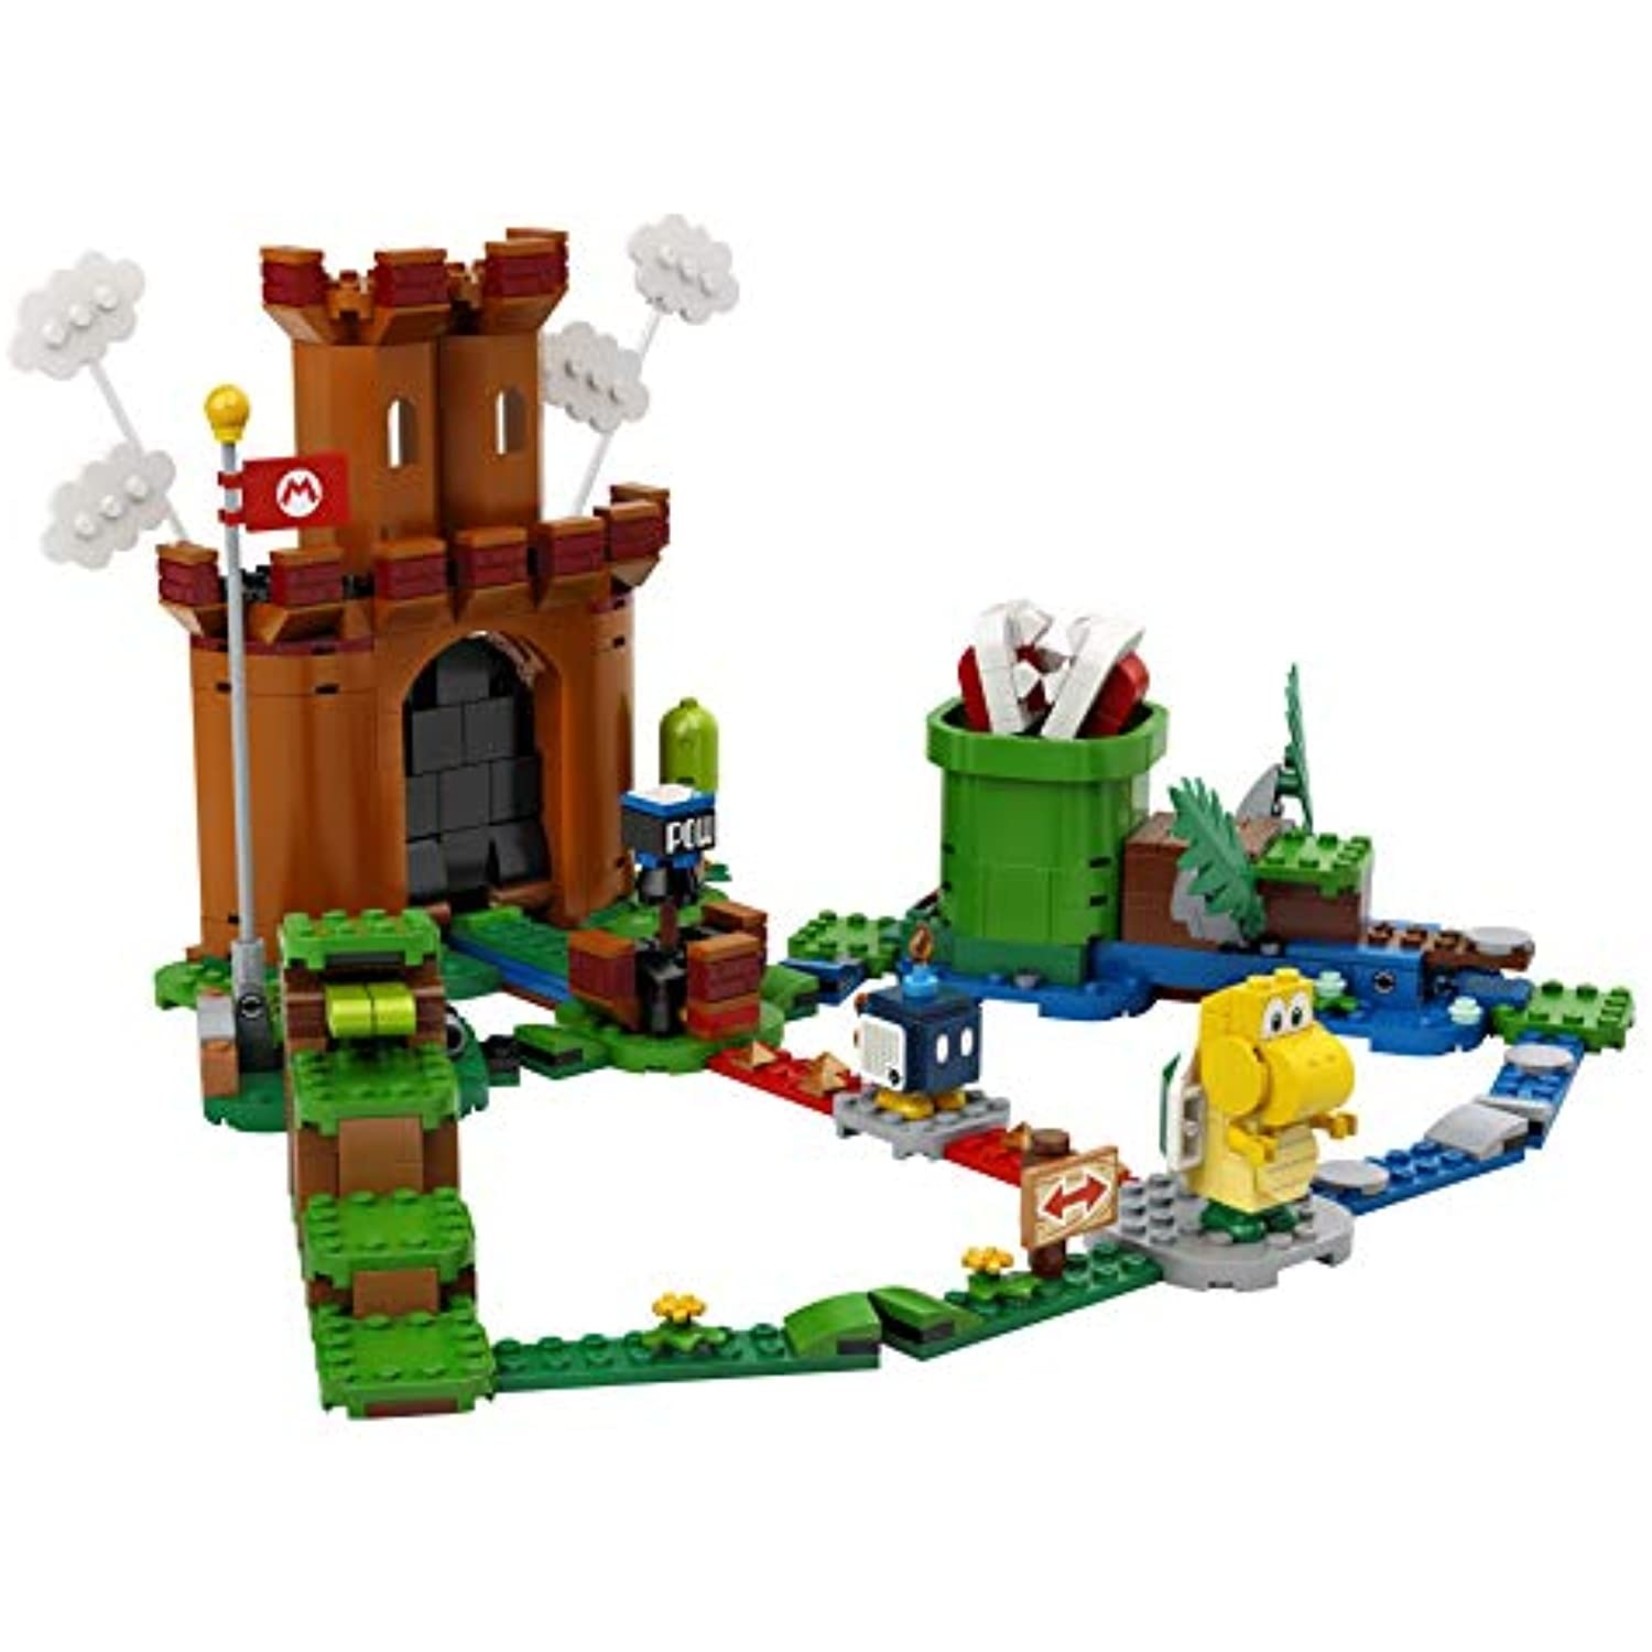 LEGO LEGO Super Mario Guarded Fortress Expansion Set 71362